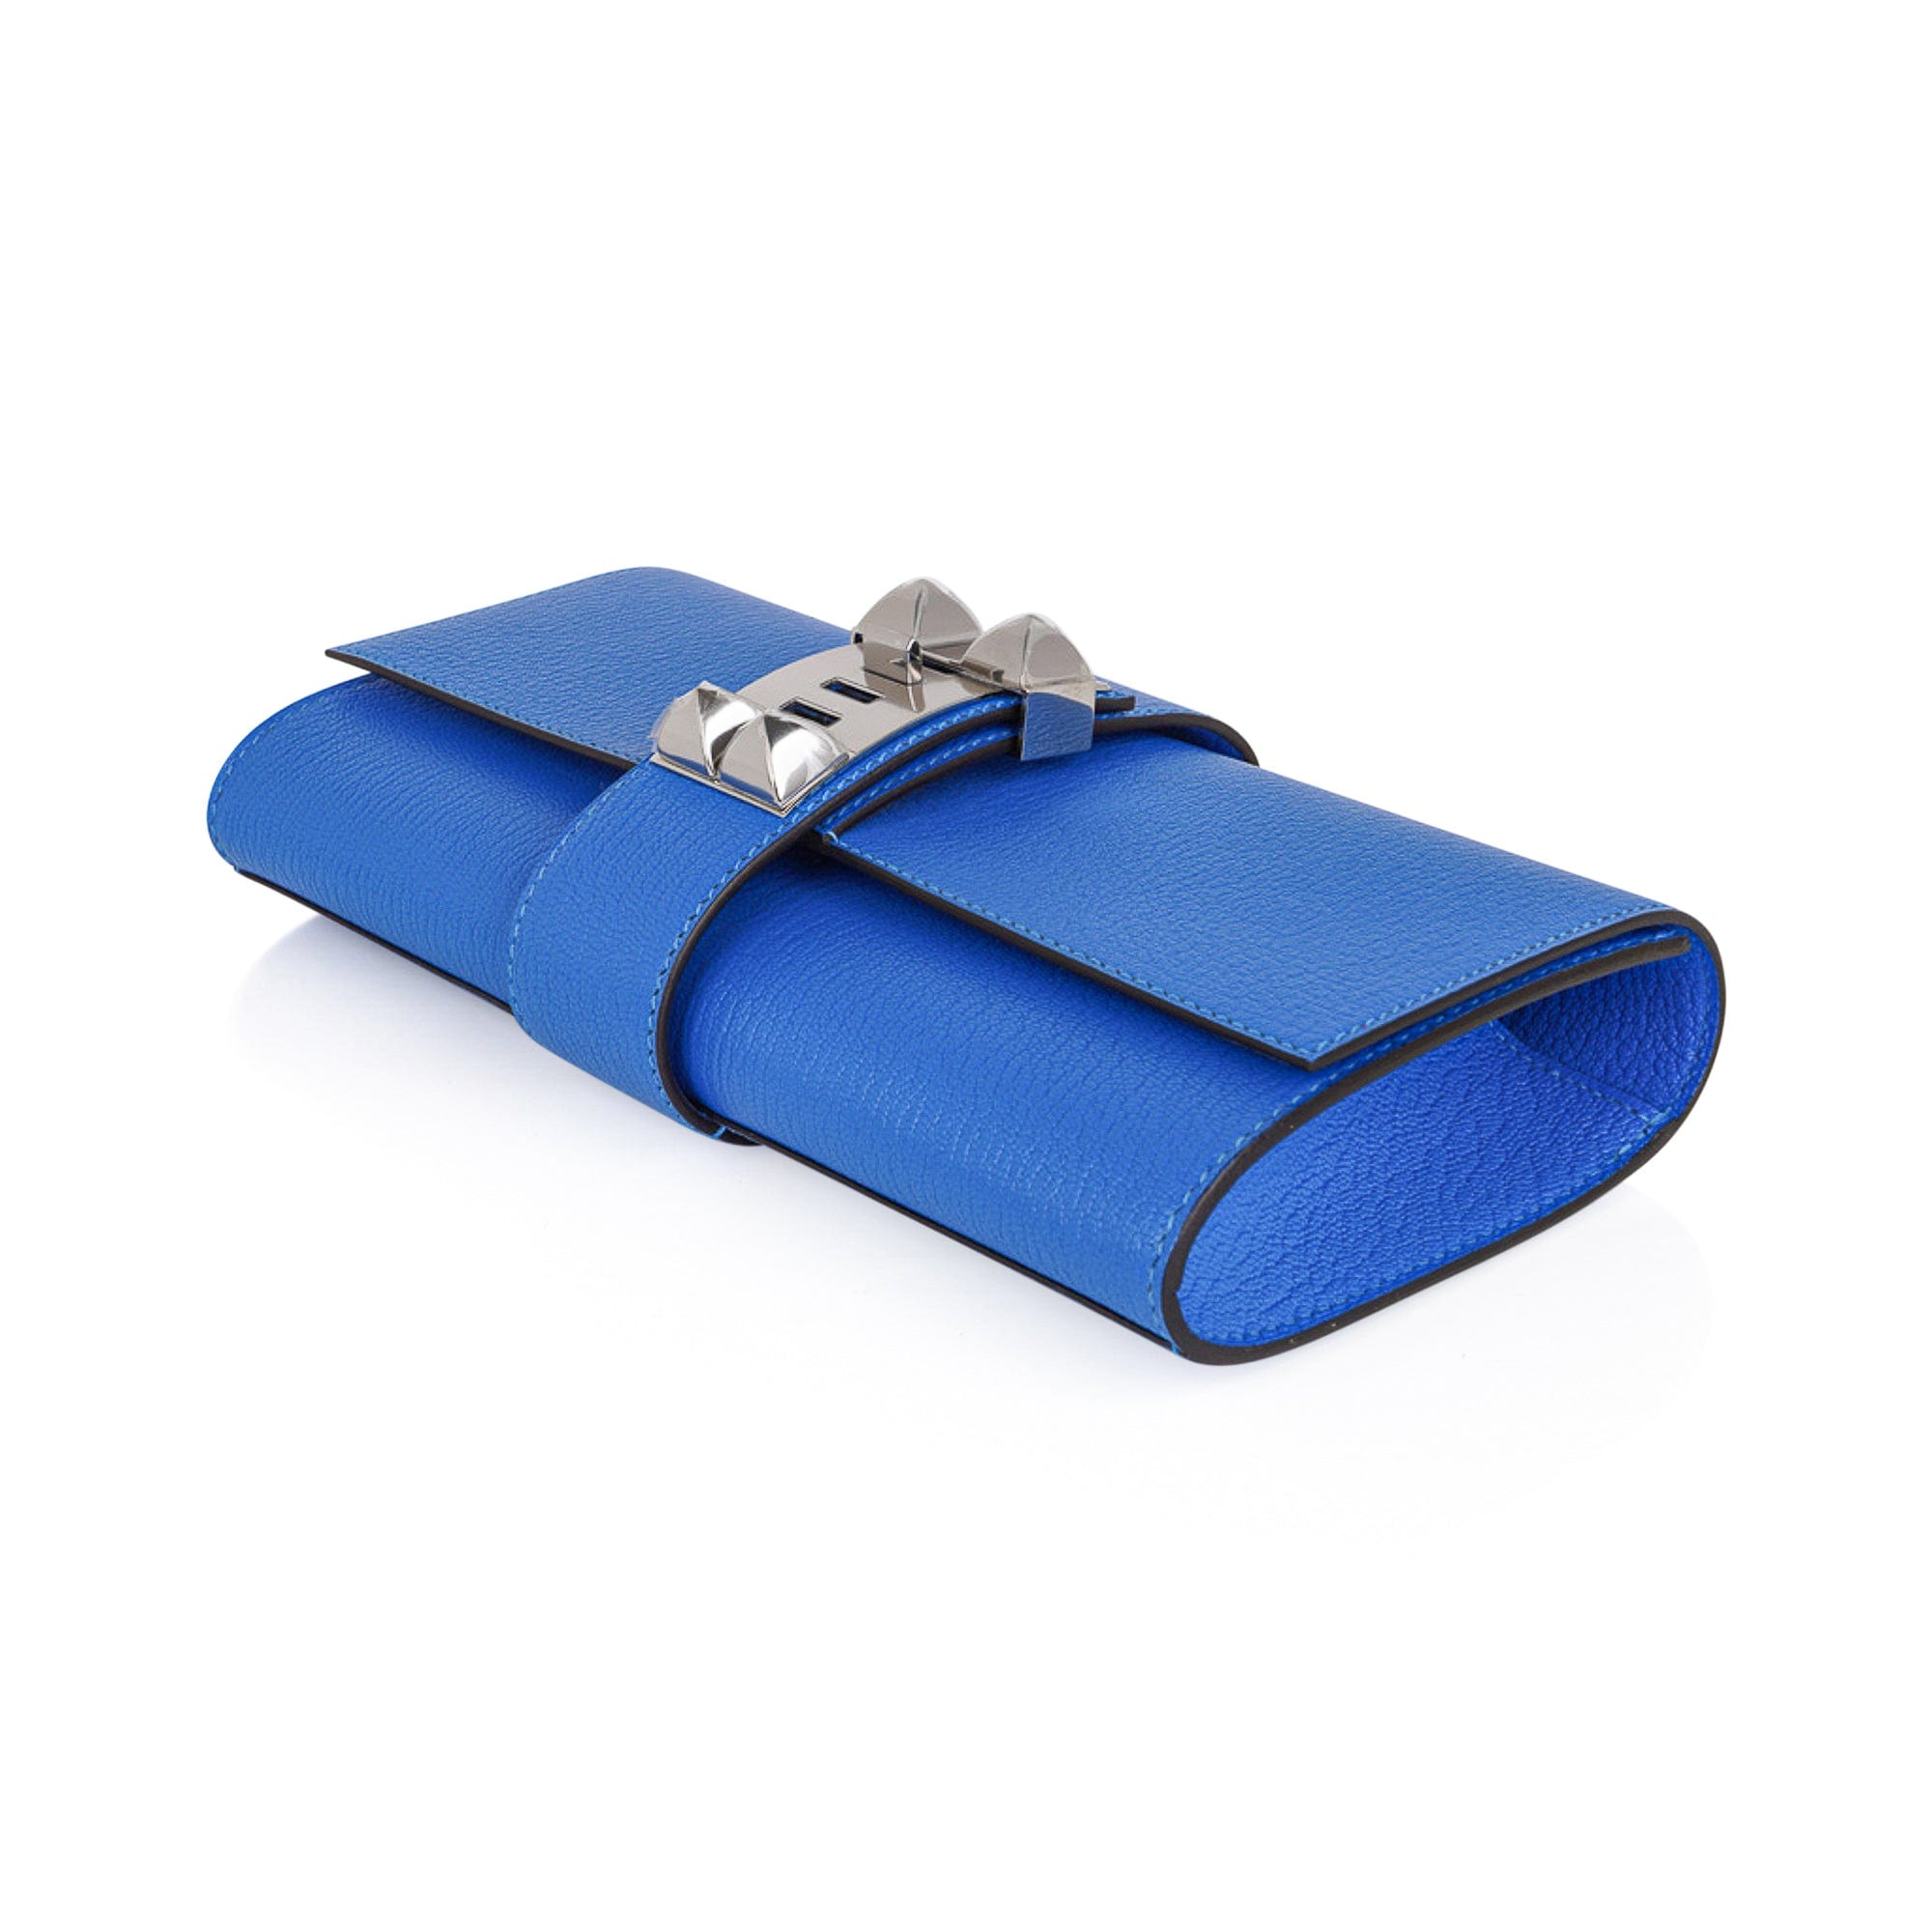 Hermès Medor 23 Clutch Blue Brighton Swift Permabrass Hardware Bag